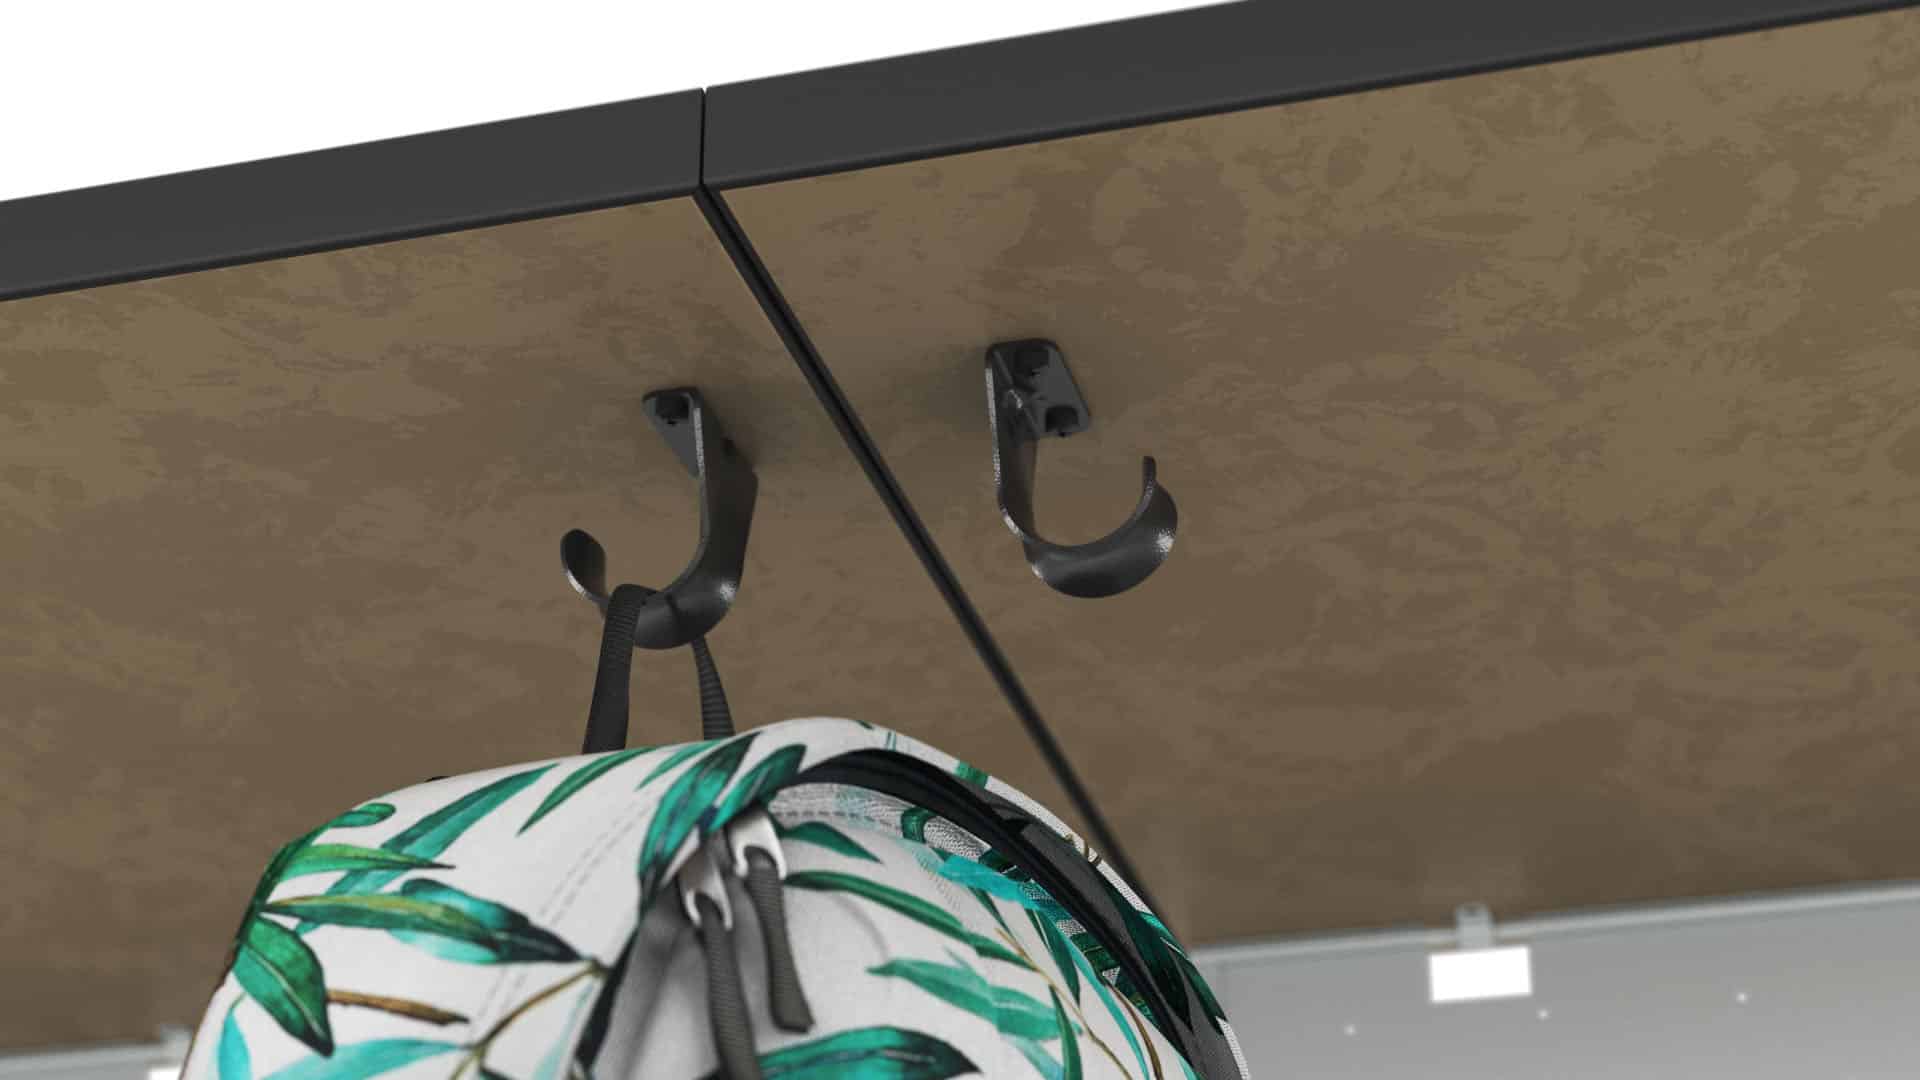 Bag hook option on underside of table